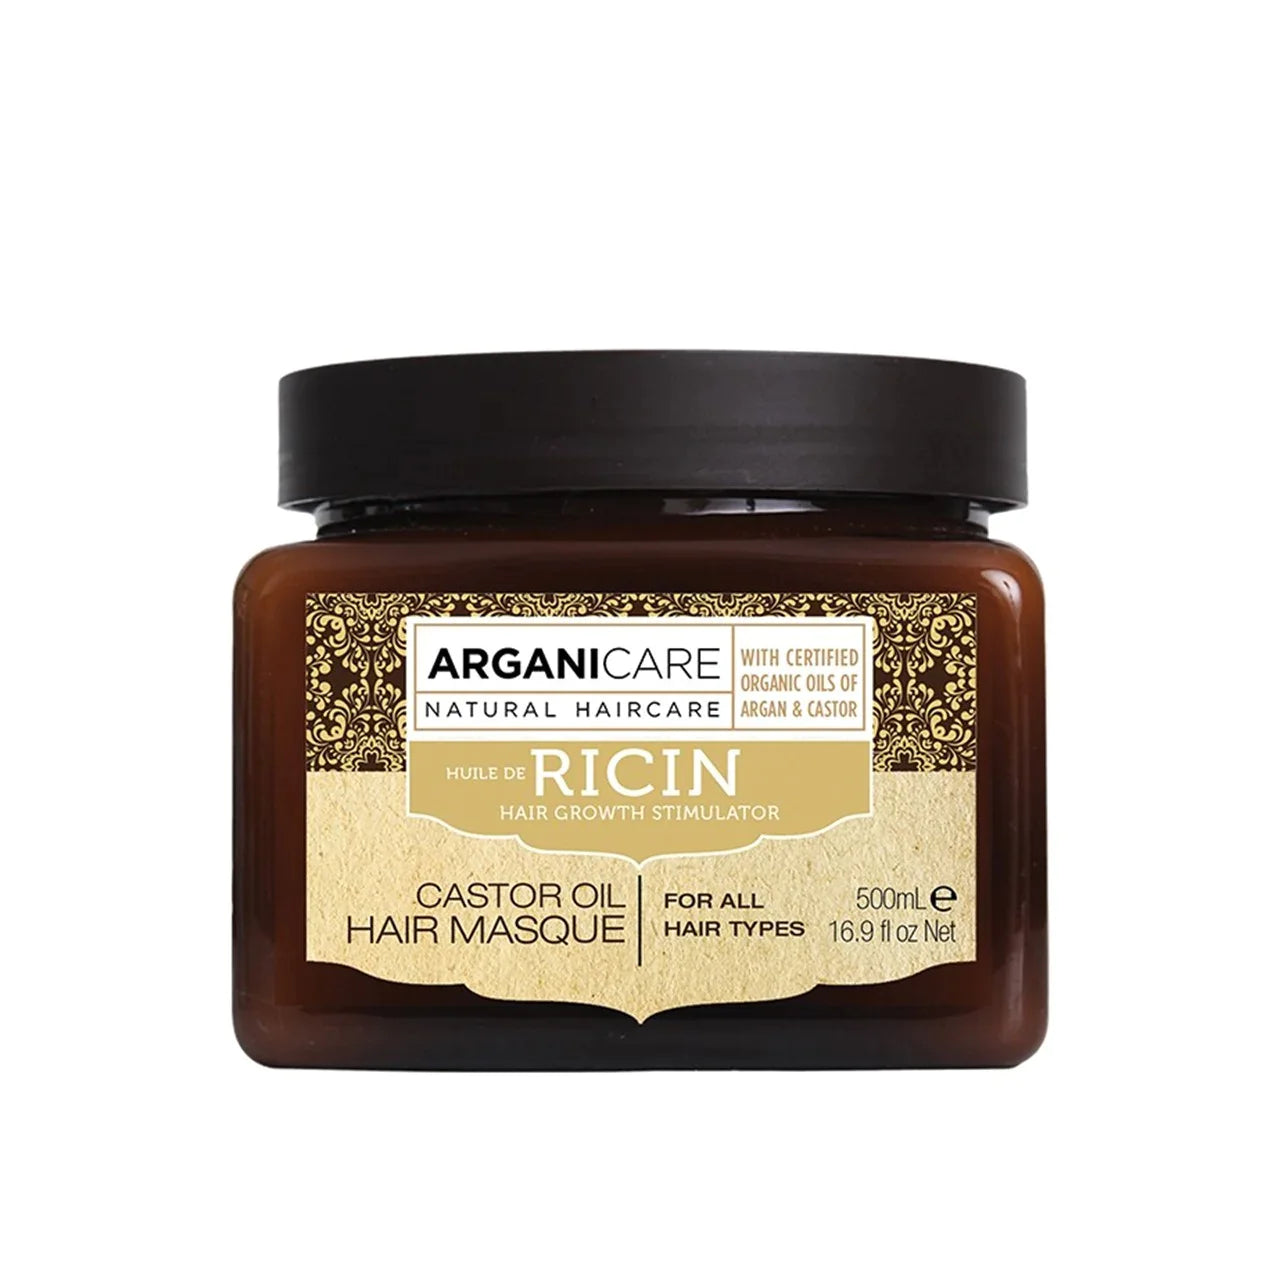 ARGANICARE RICIN Castor Oil Hair Masque Hair Growth Stimulator | 500ml ( slightly damaged packaging )